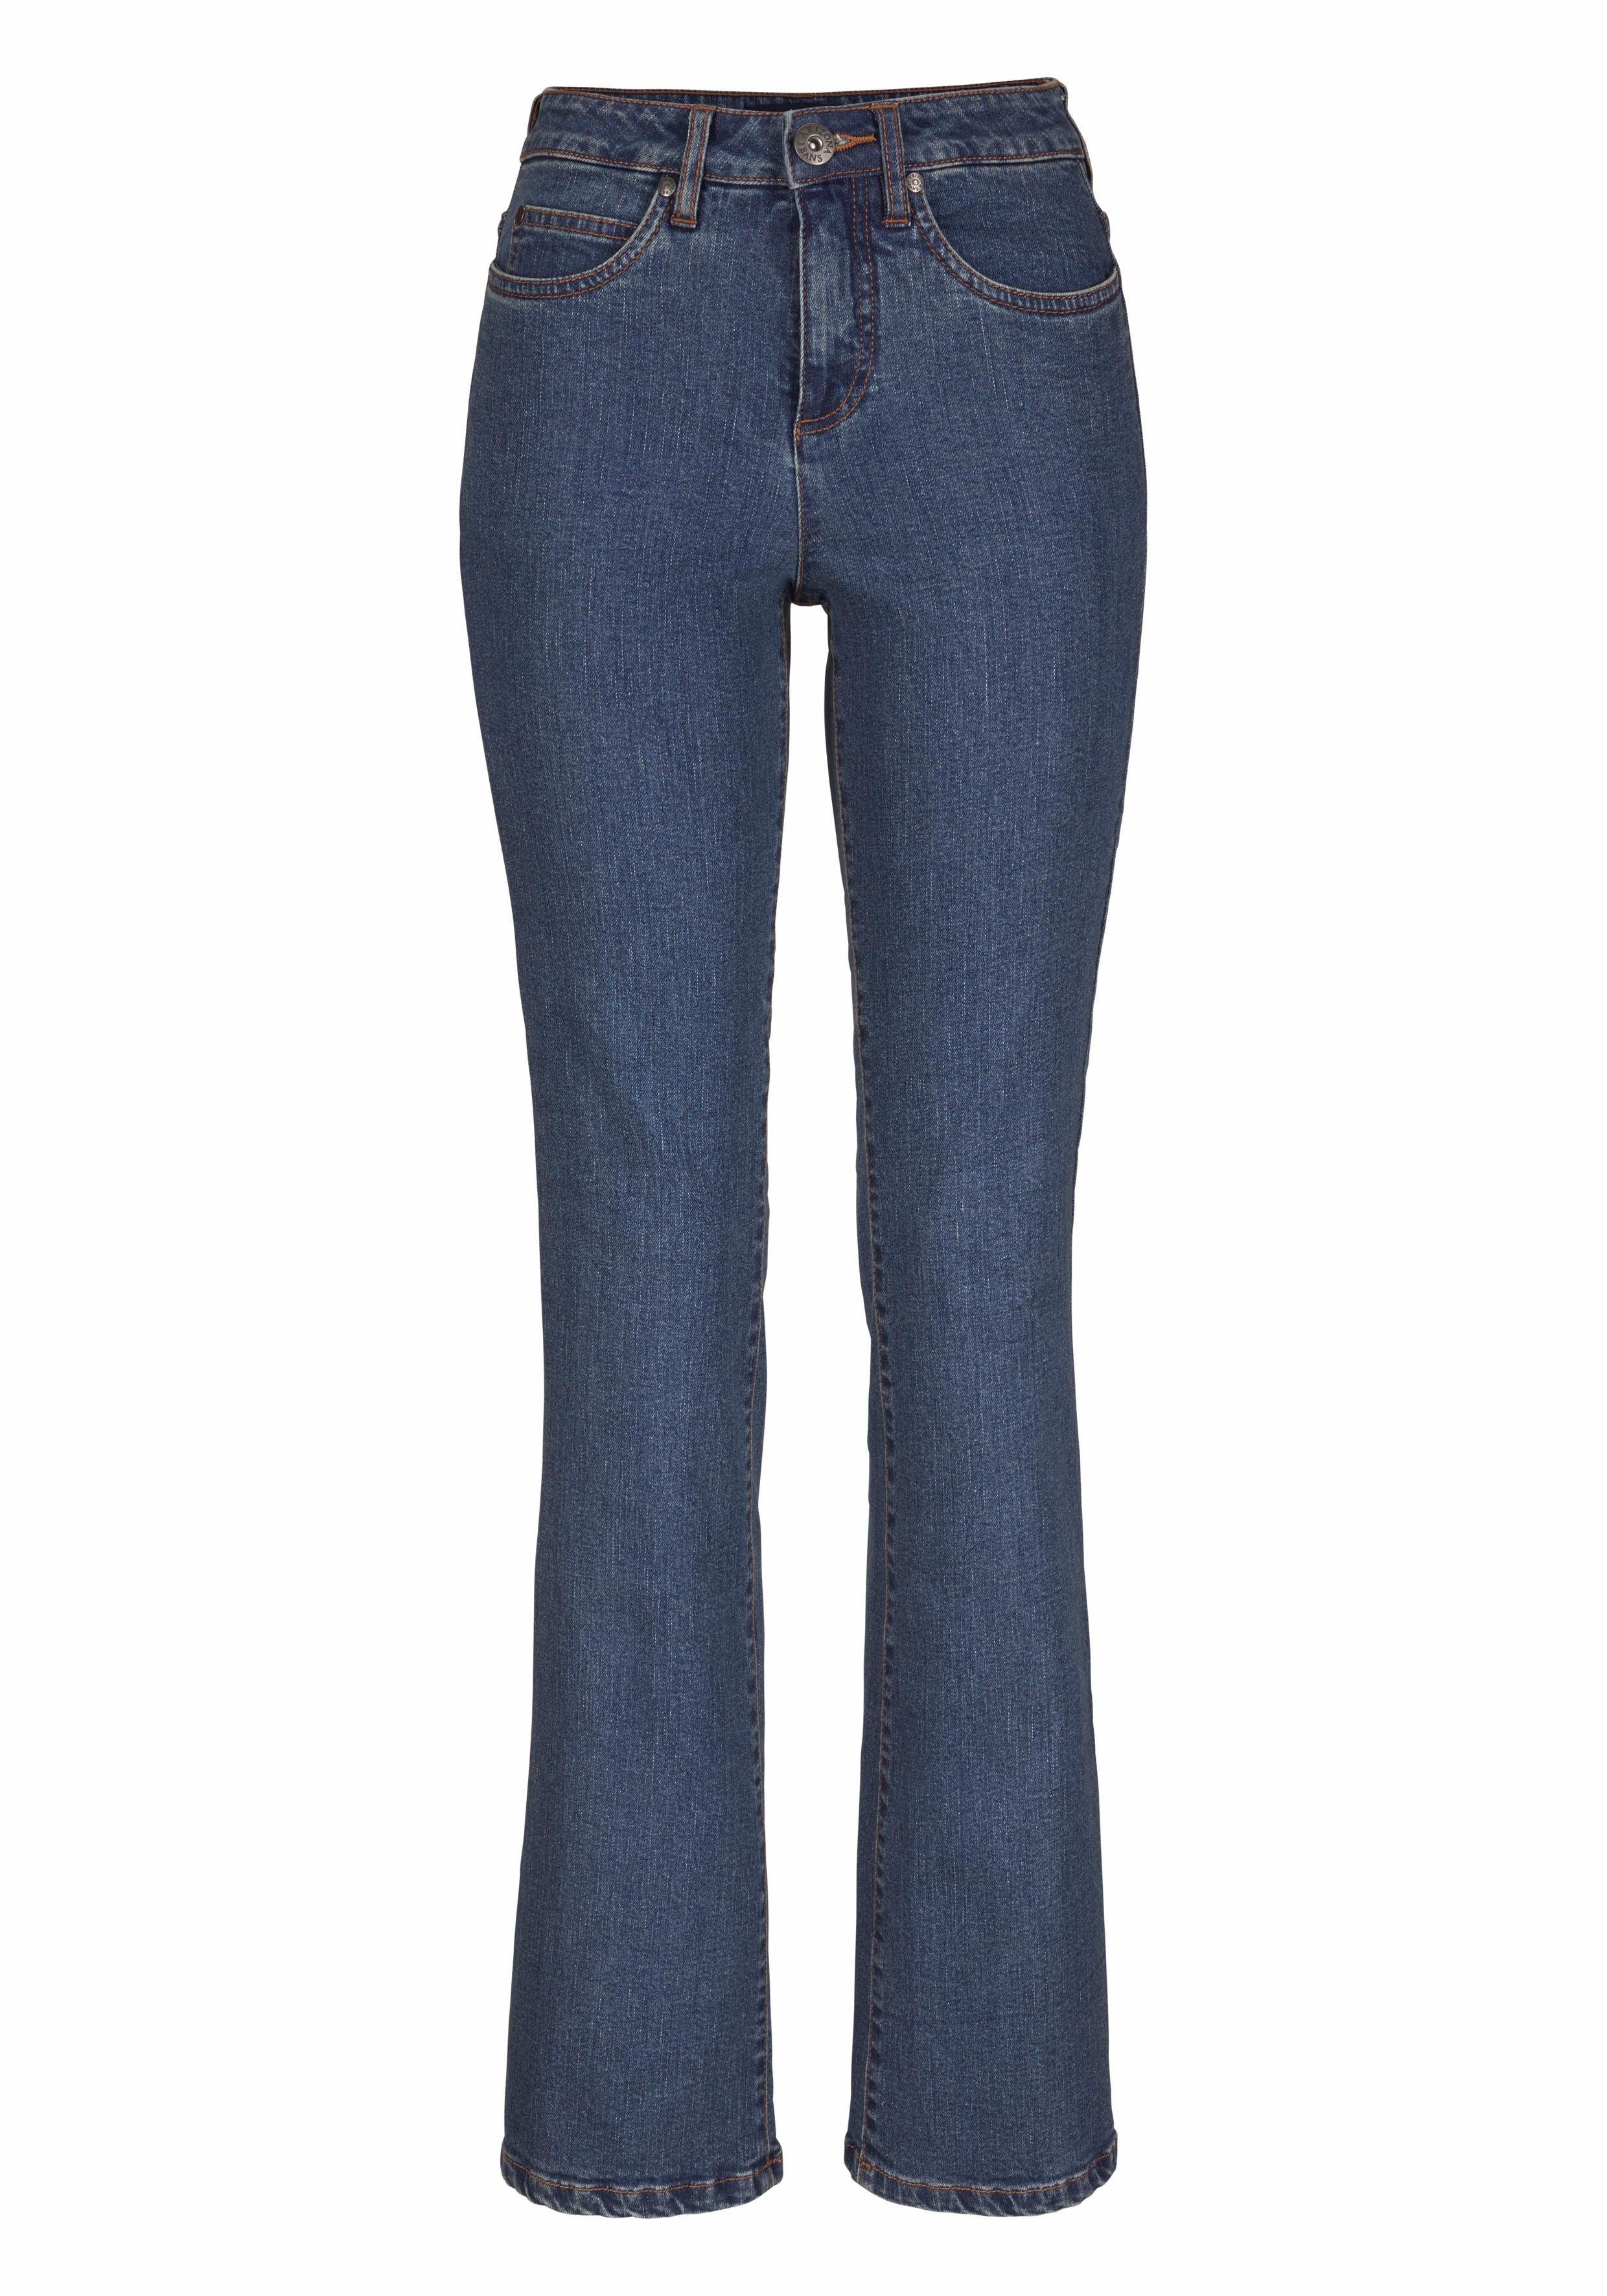 Bootcut-Jeans blue-stone Comfort-Fit Waist High Arizona